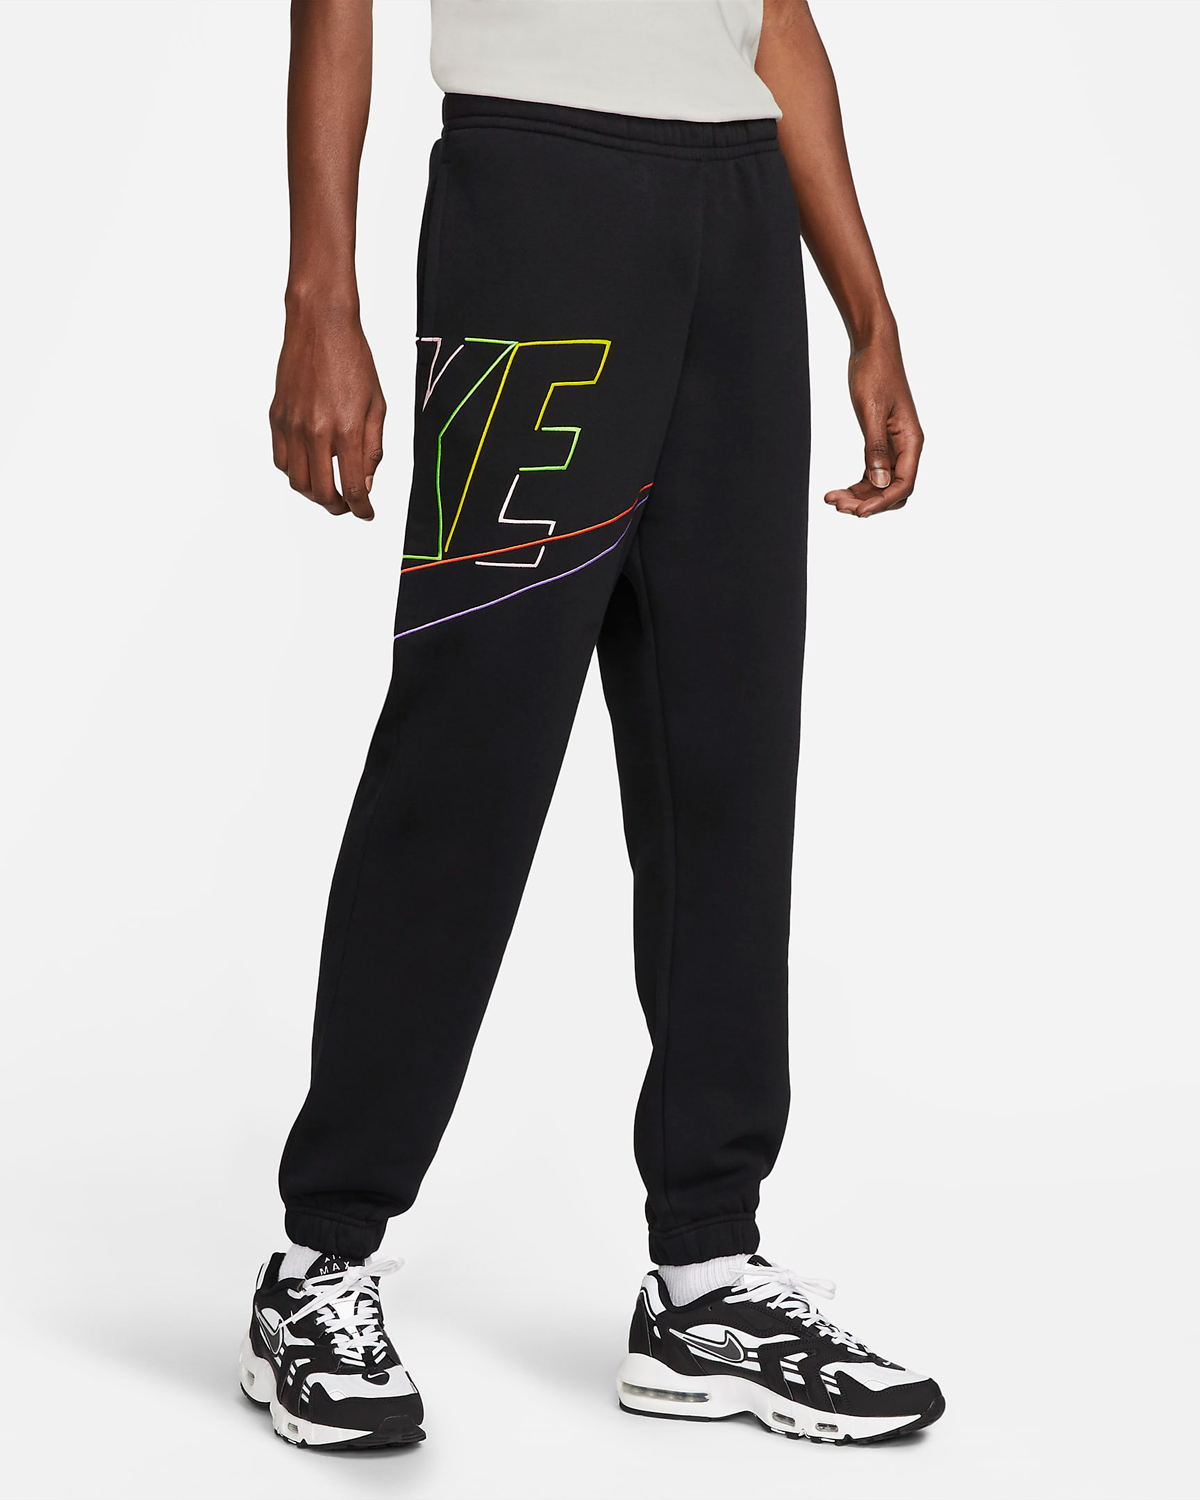 Nike-Club-Fleece-Pants-Black-Multi-Color